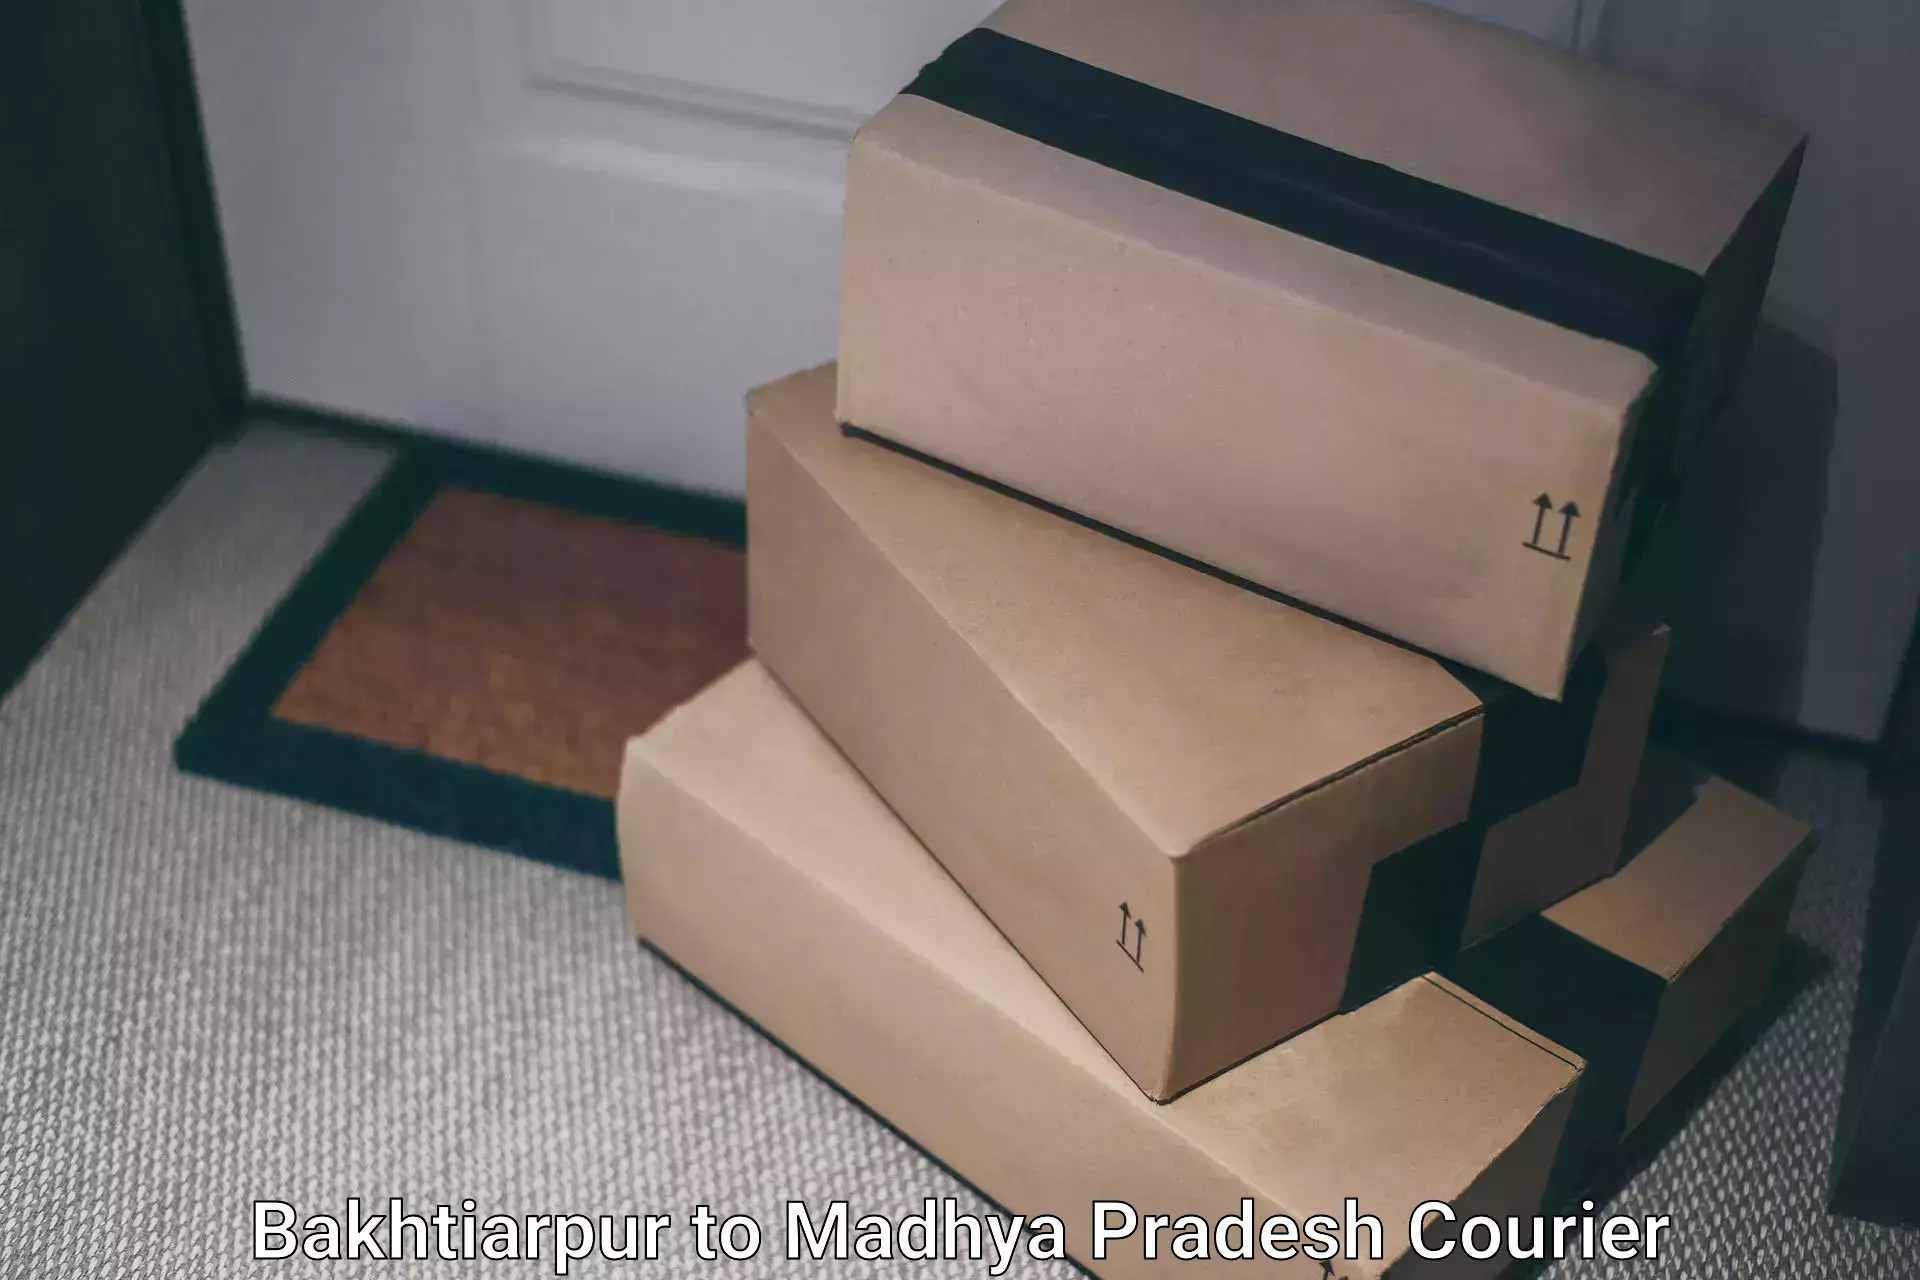 Courier service comparison Bakhtiarpur to Madhya Pradesh